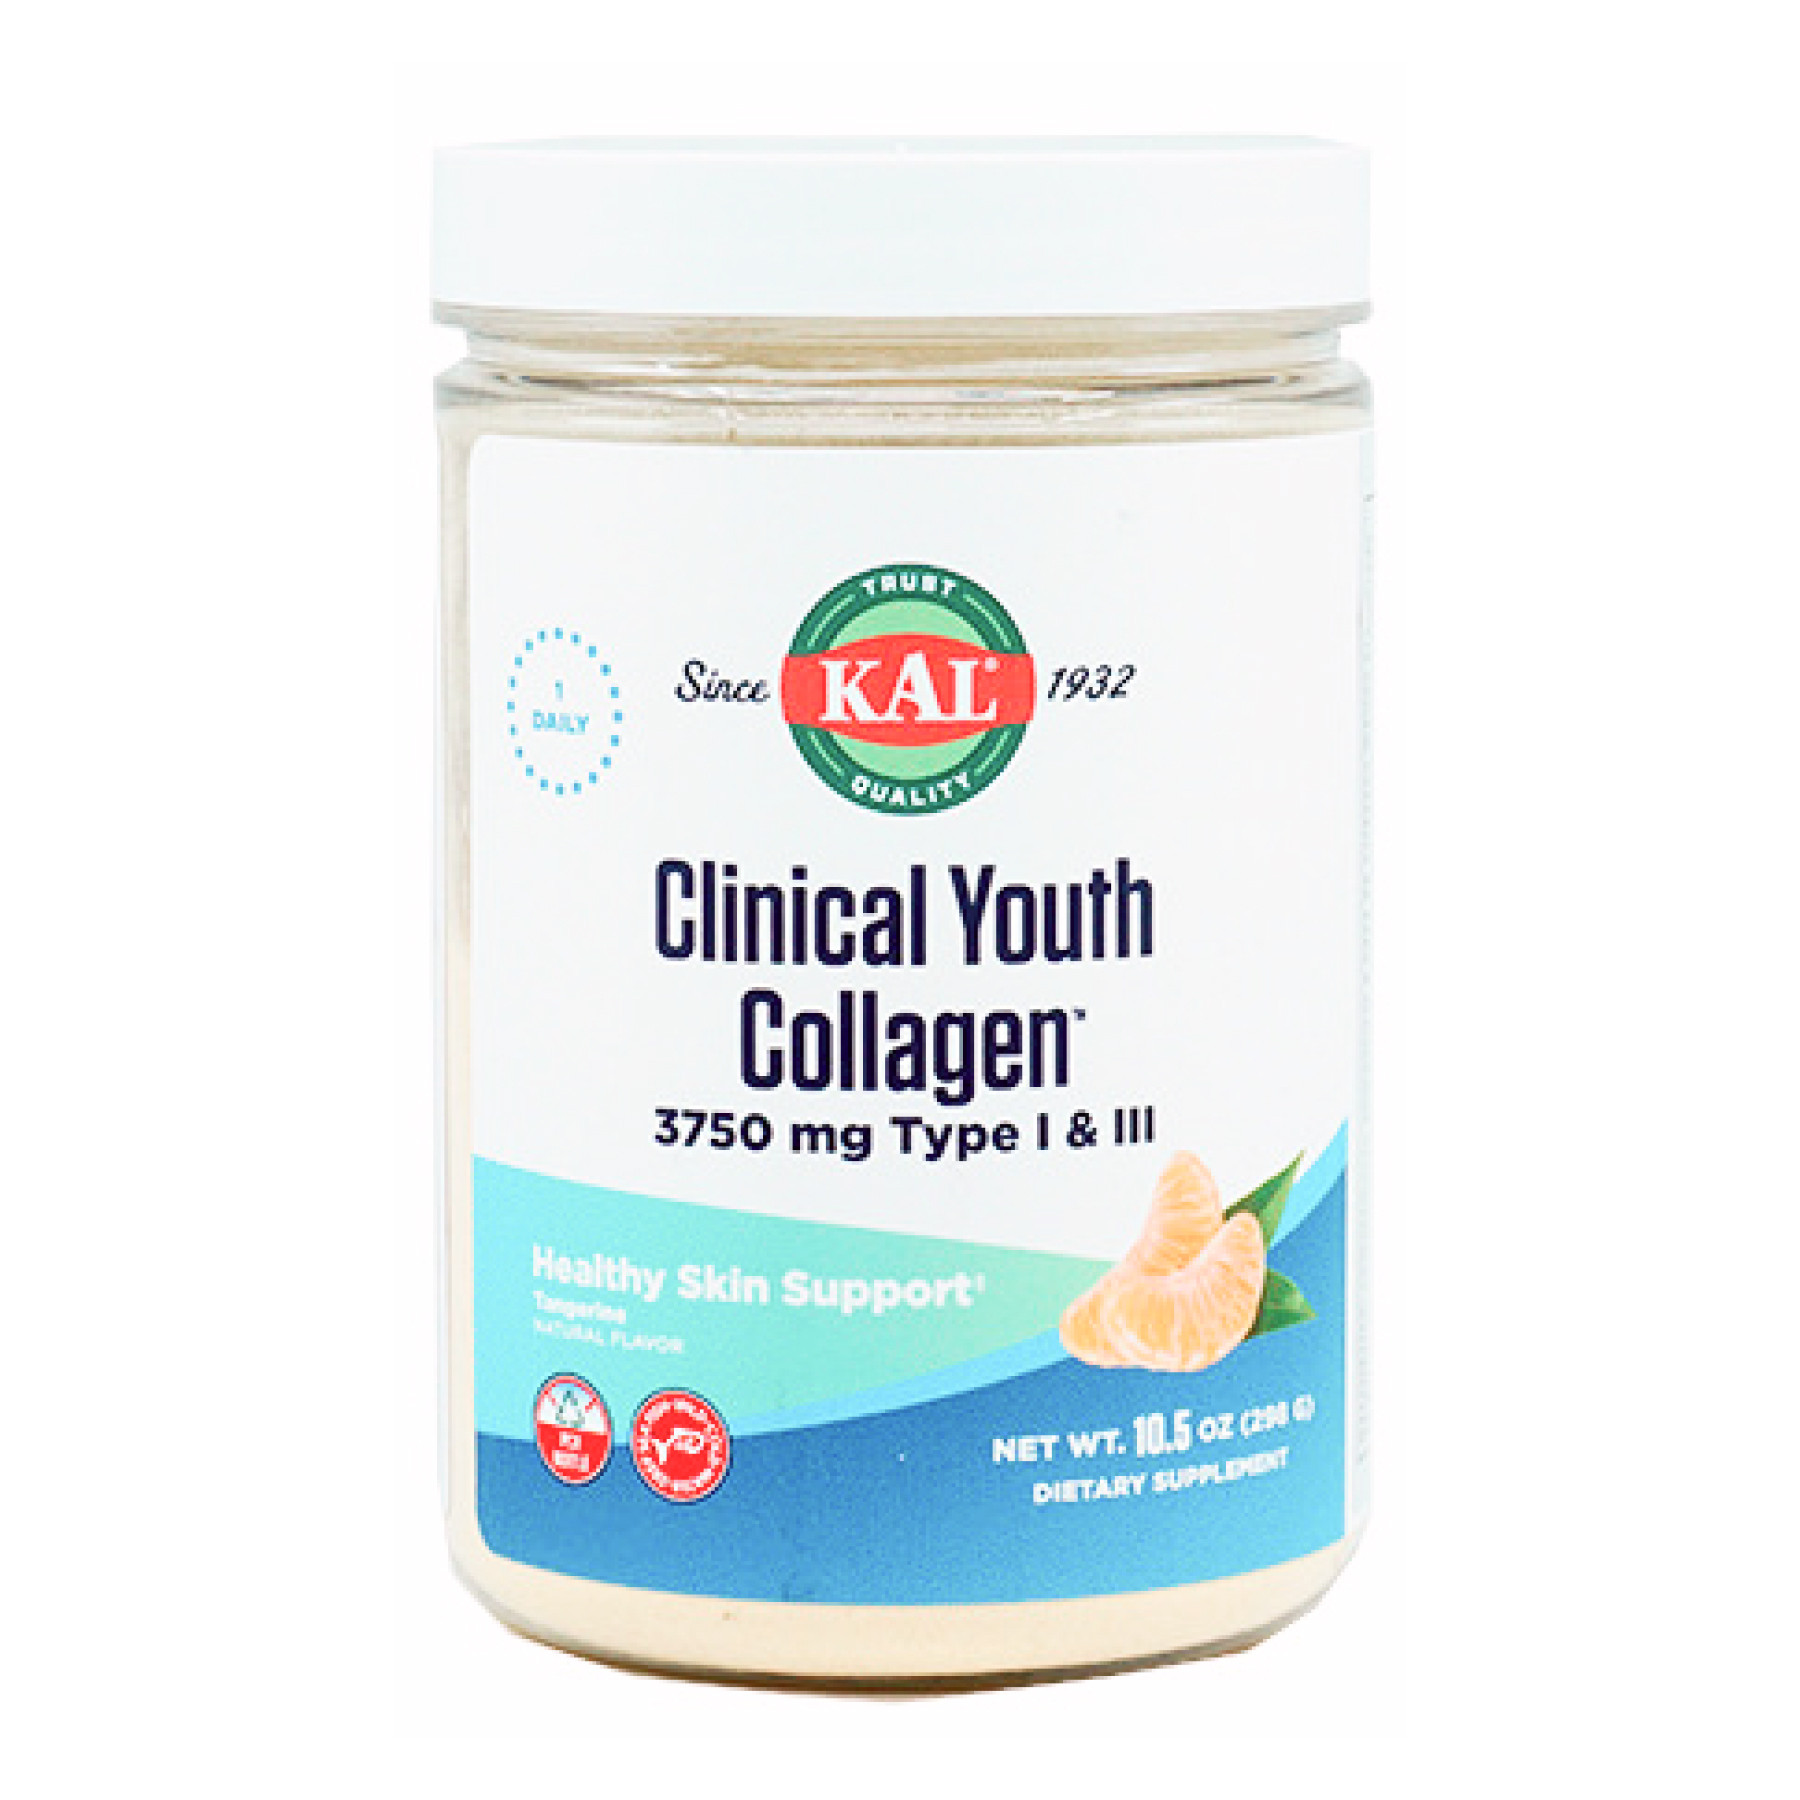 Порошок Clinical Youth Collagen Type I & III - 10.5 oz 2022-10-1004